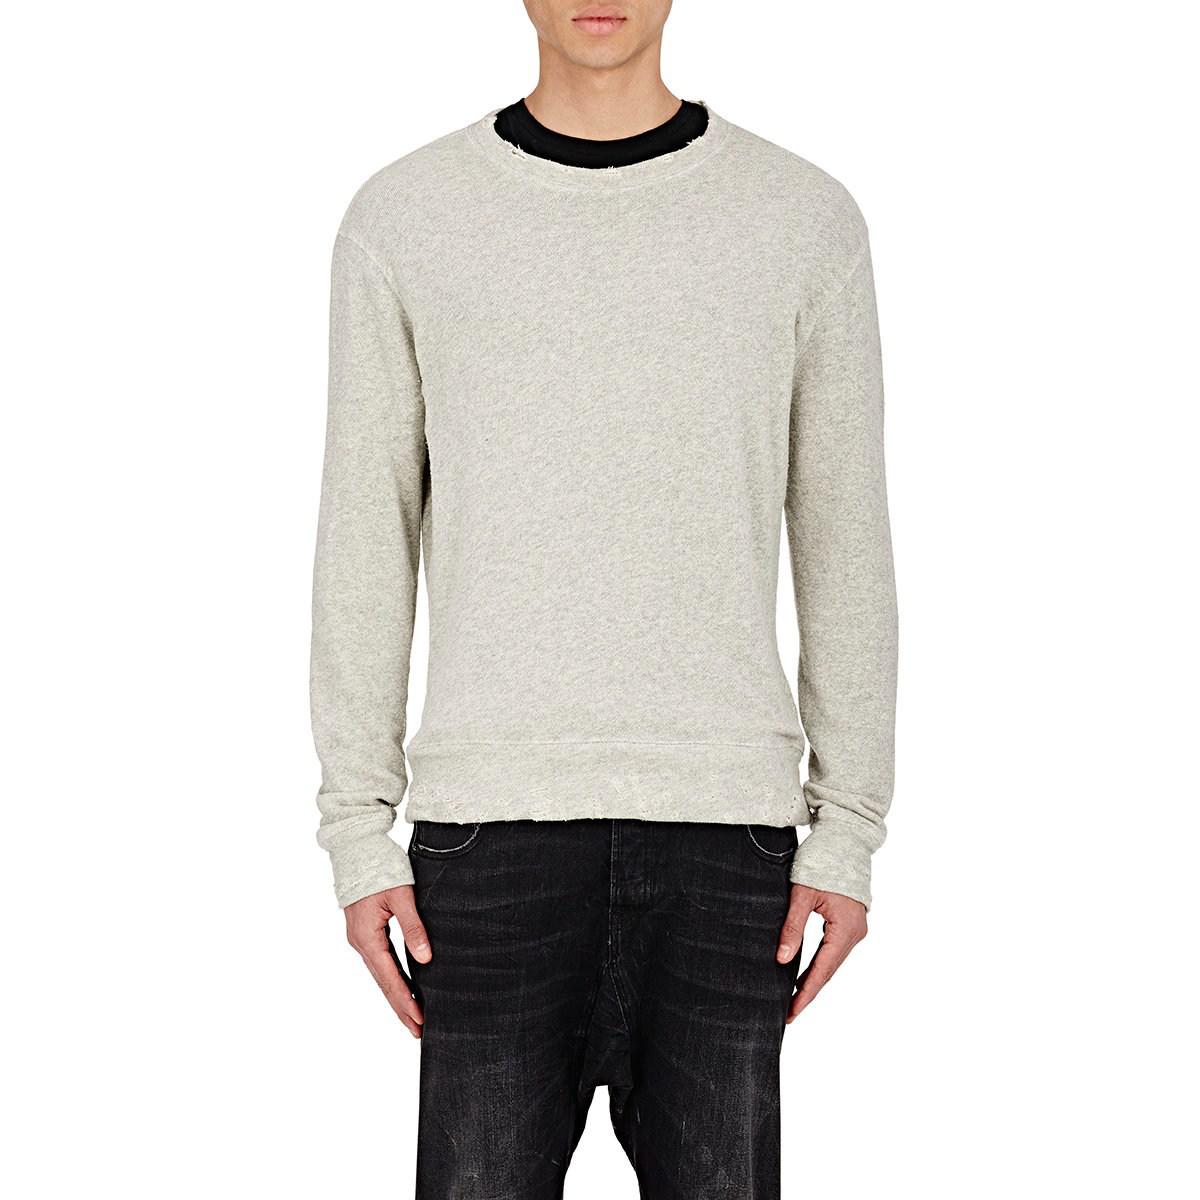 R13 Cotton Distressed Sweatshirt in Gray for Men - Lyst